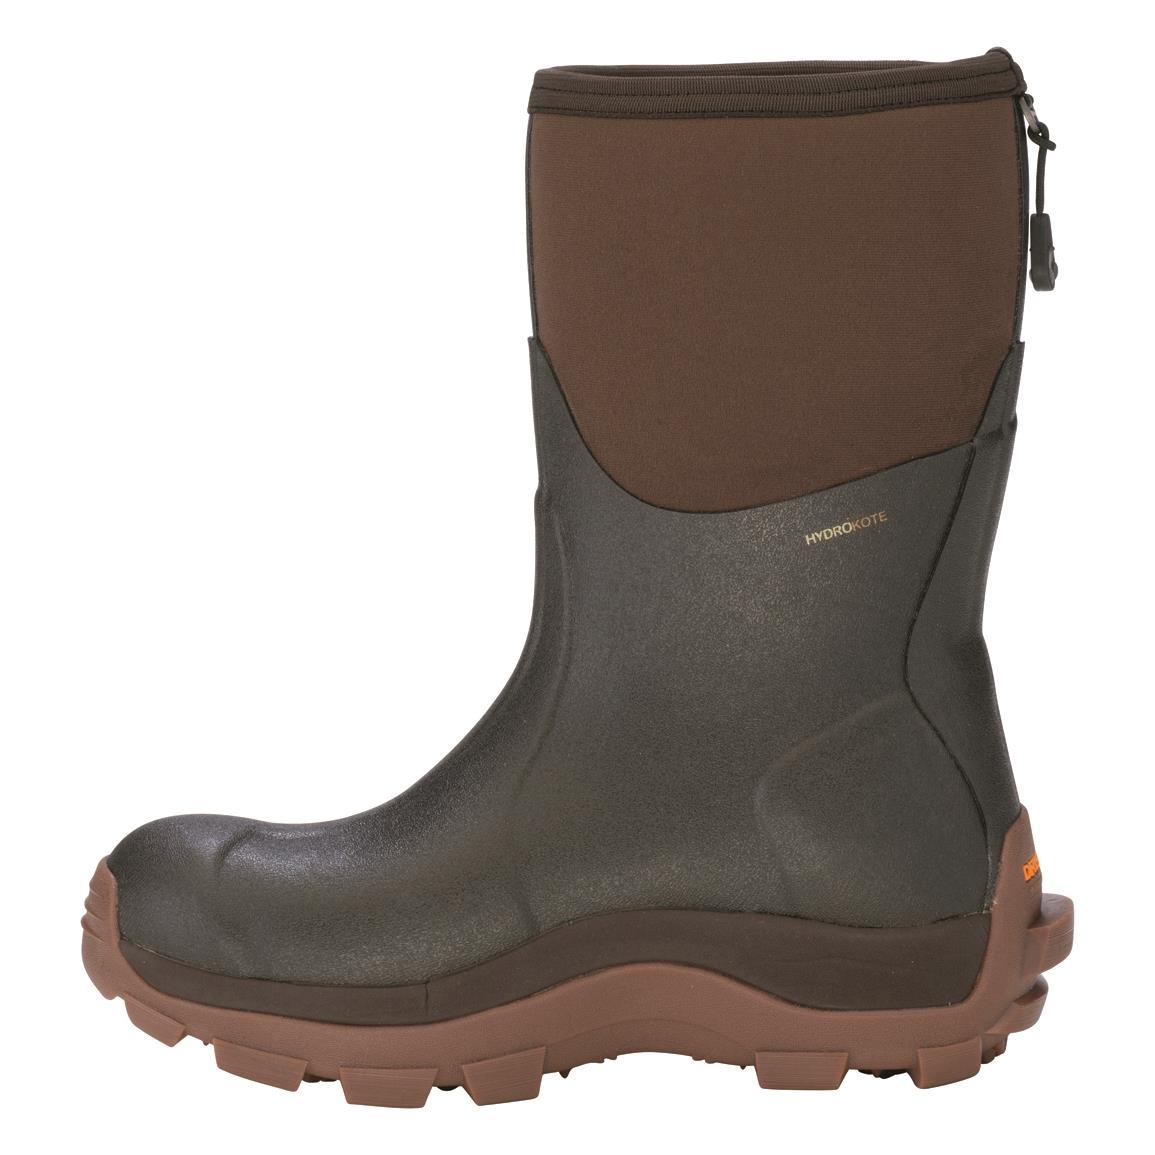 DryShod Kids' Haymaker Waterproof Rubber Work Boots, Brown/orange